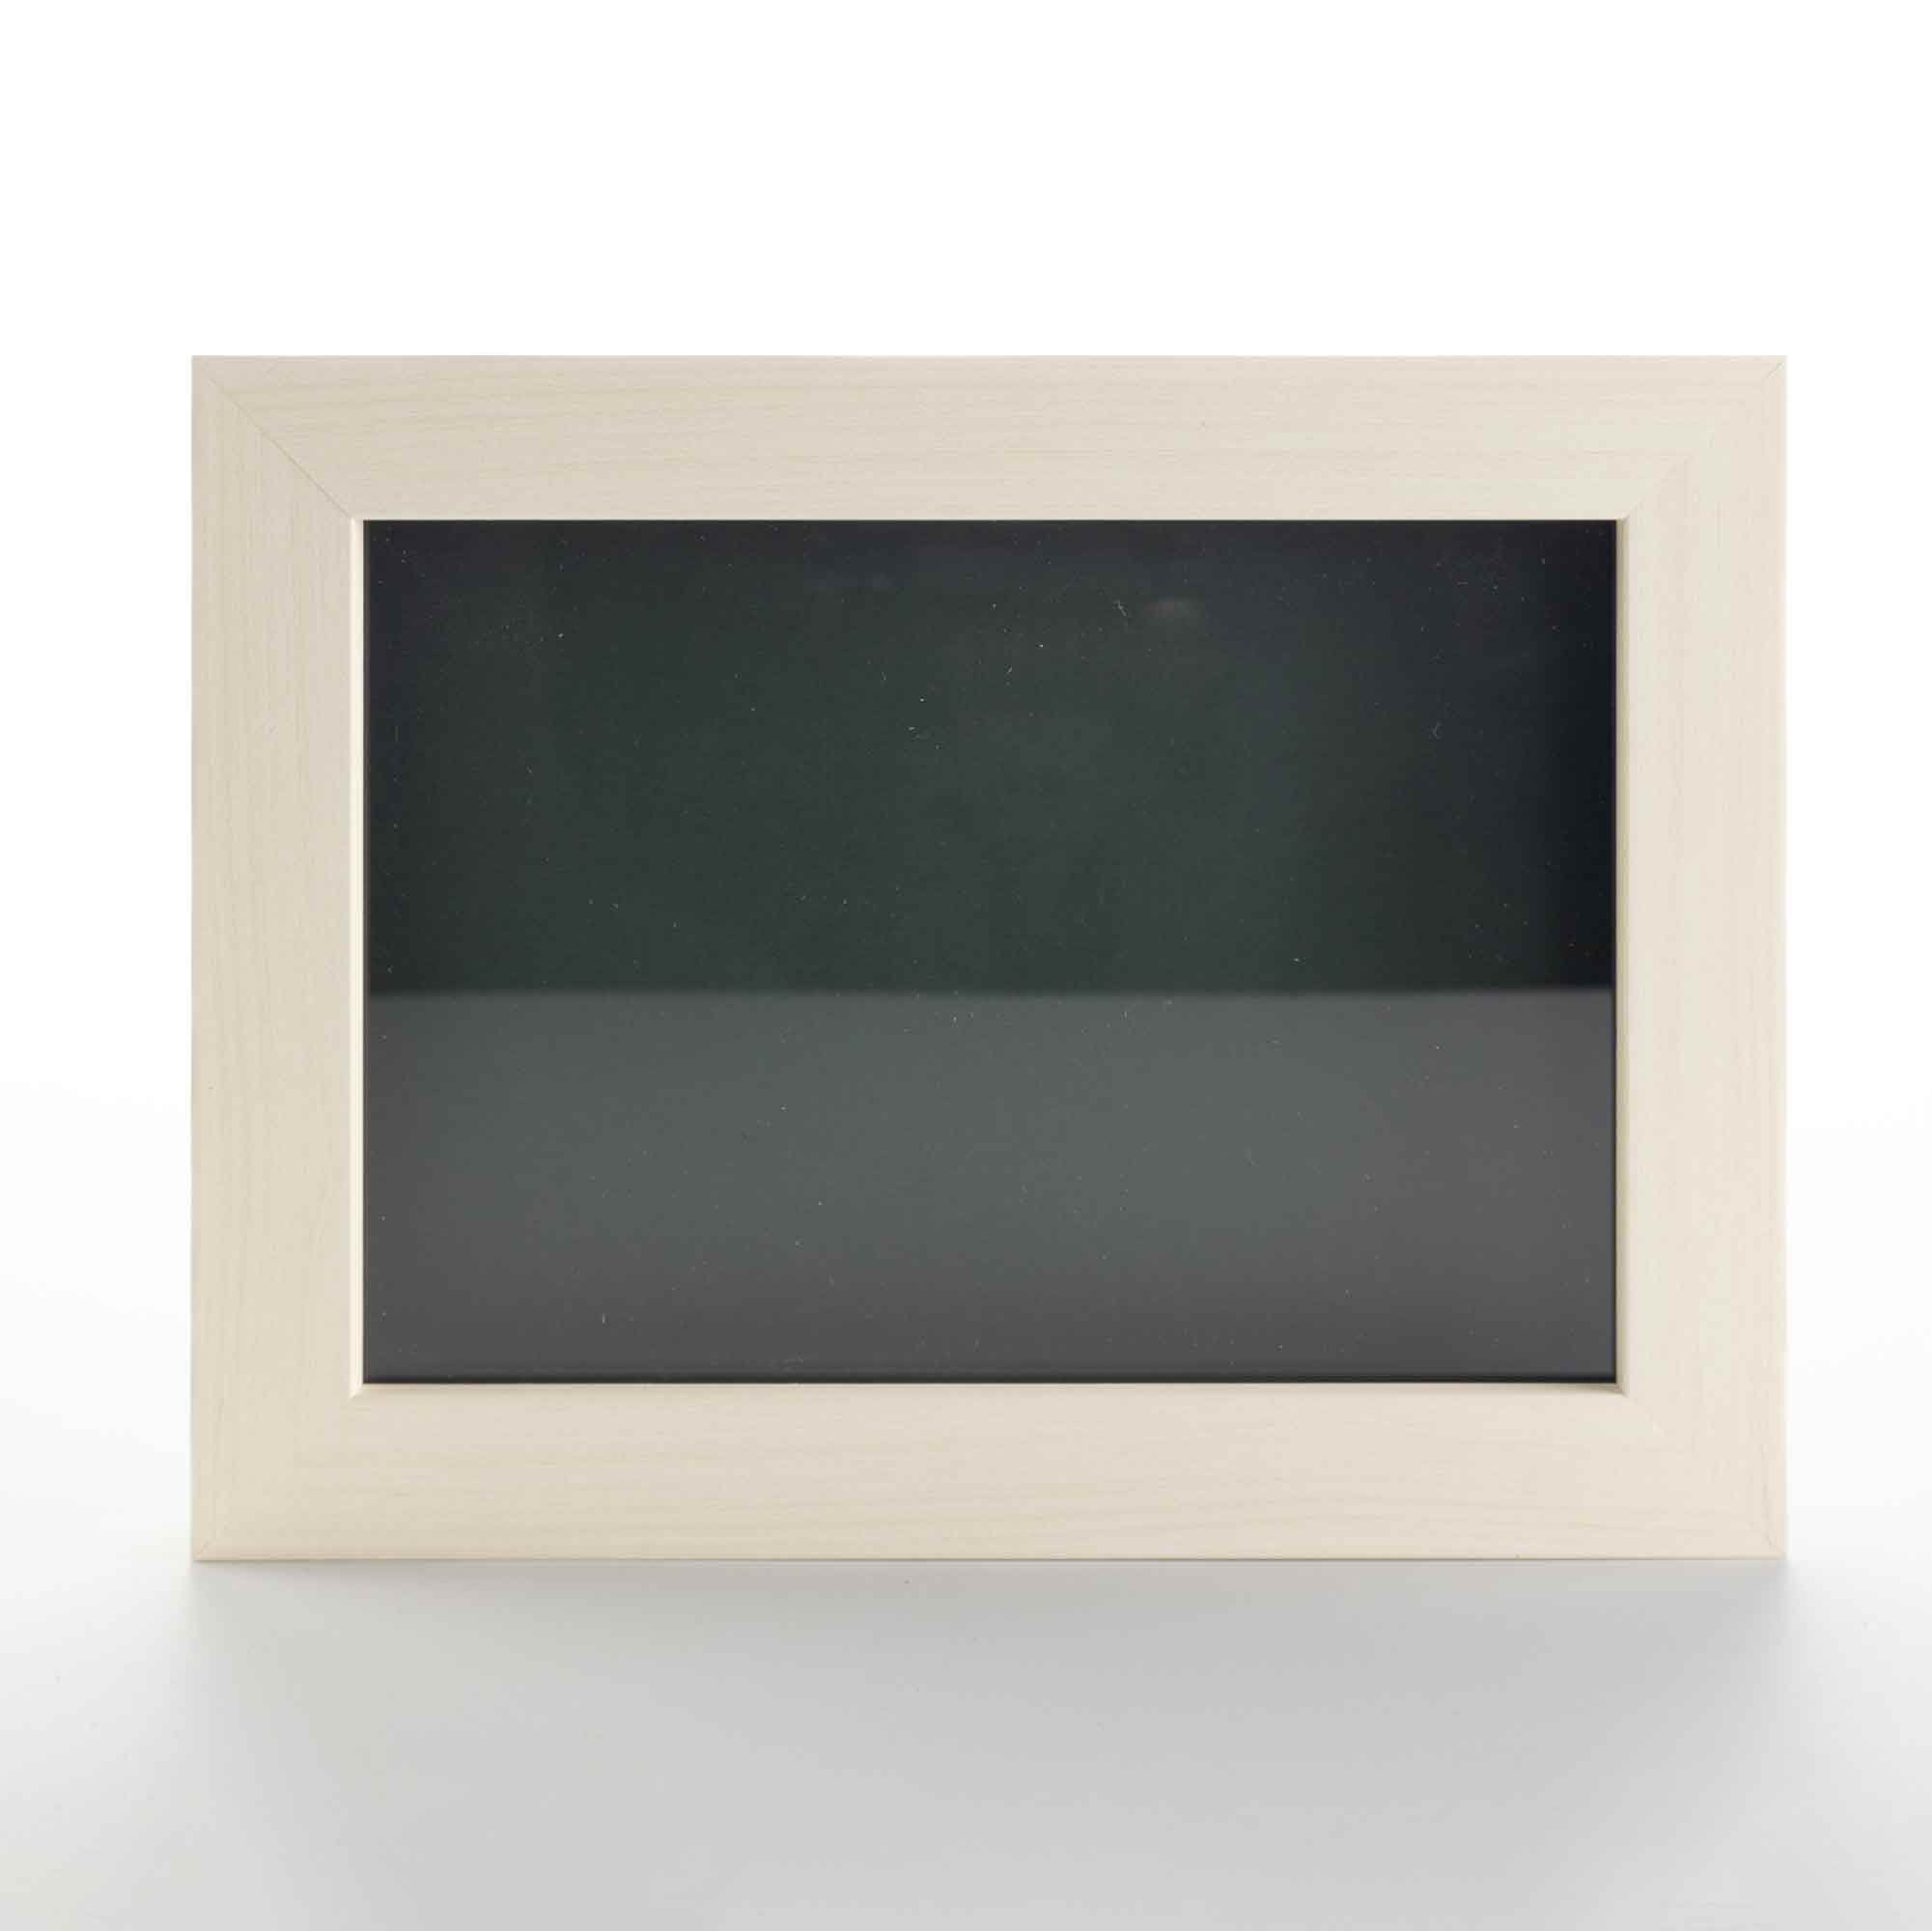 13x20 Shadow Box Frame Silver Real Wood Traditional Shadowbox Display Frame UV Acrylic Front Acid Free Backing and Hardware